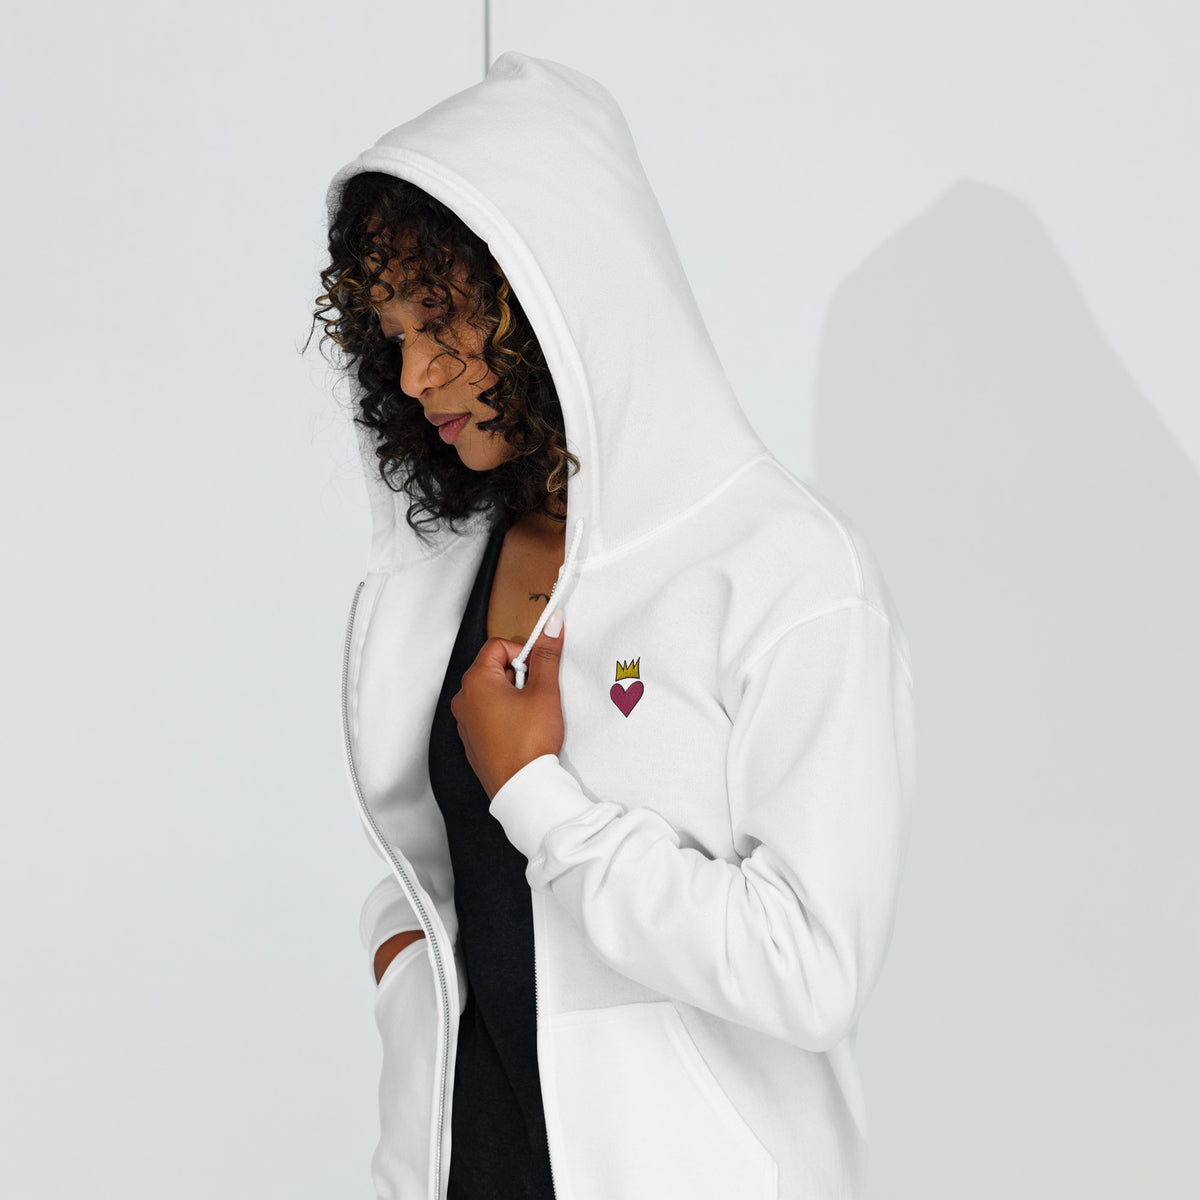 Shana Recker Art Unisex heavy blend zip hoodie